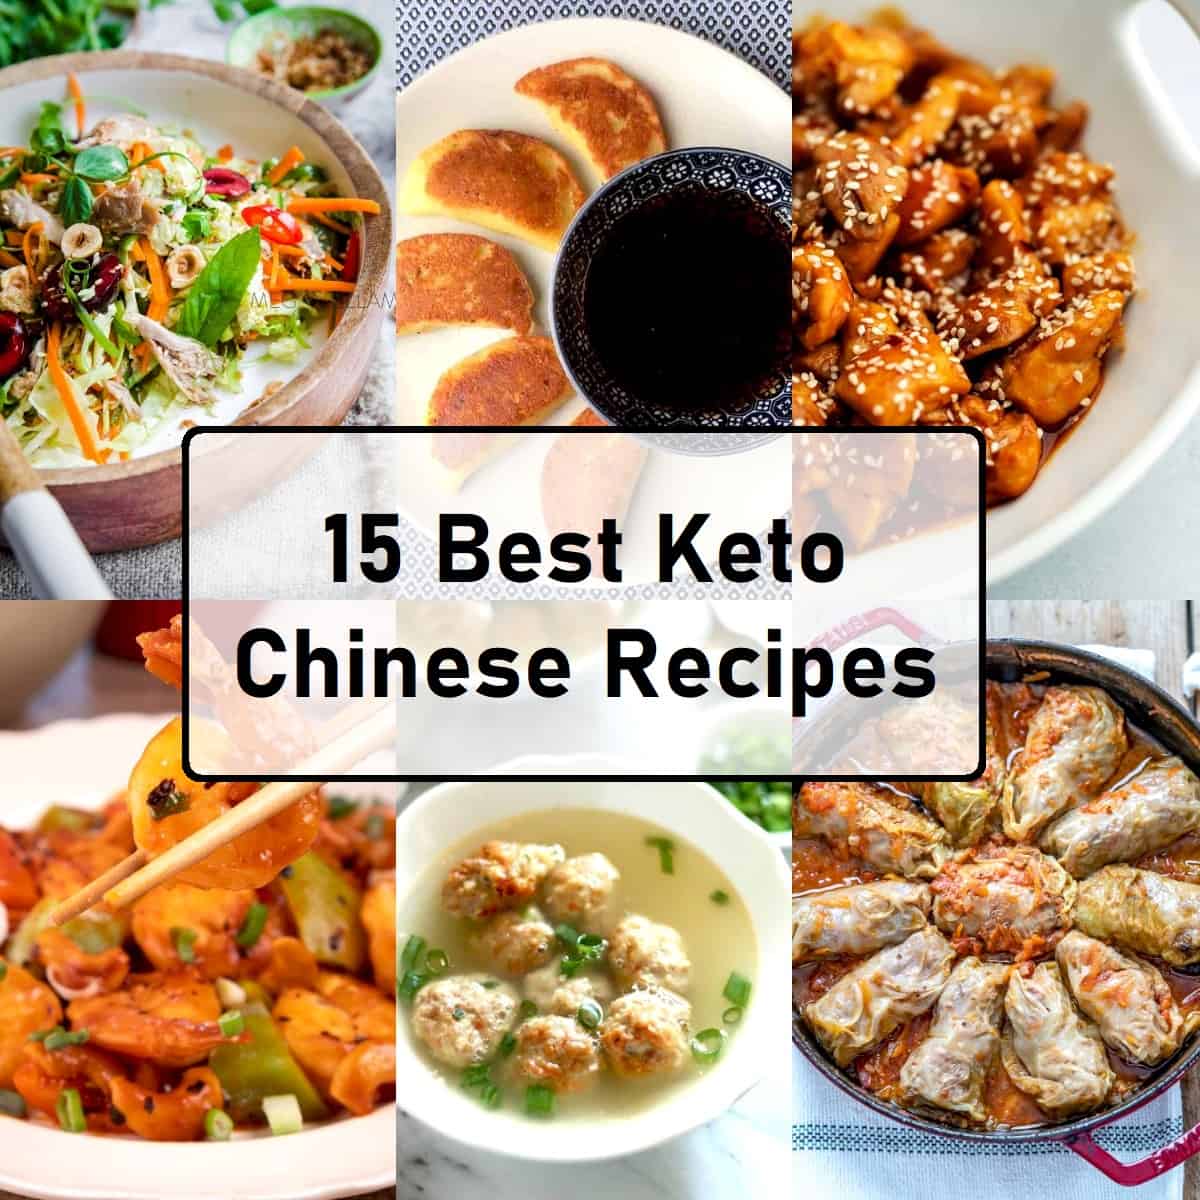 Keto Chinese recipes with logo